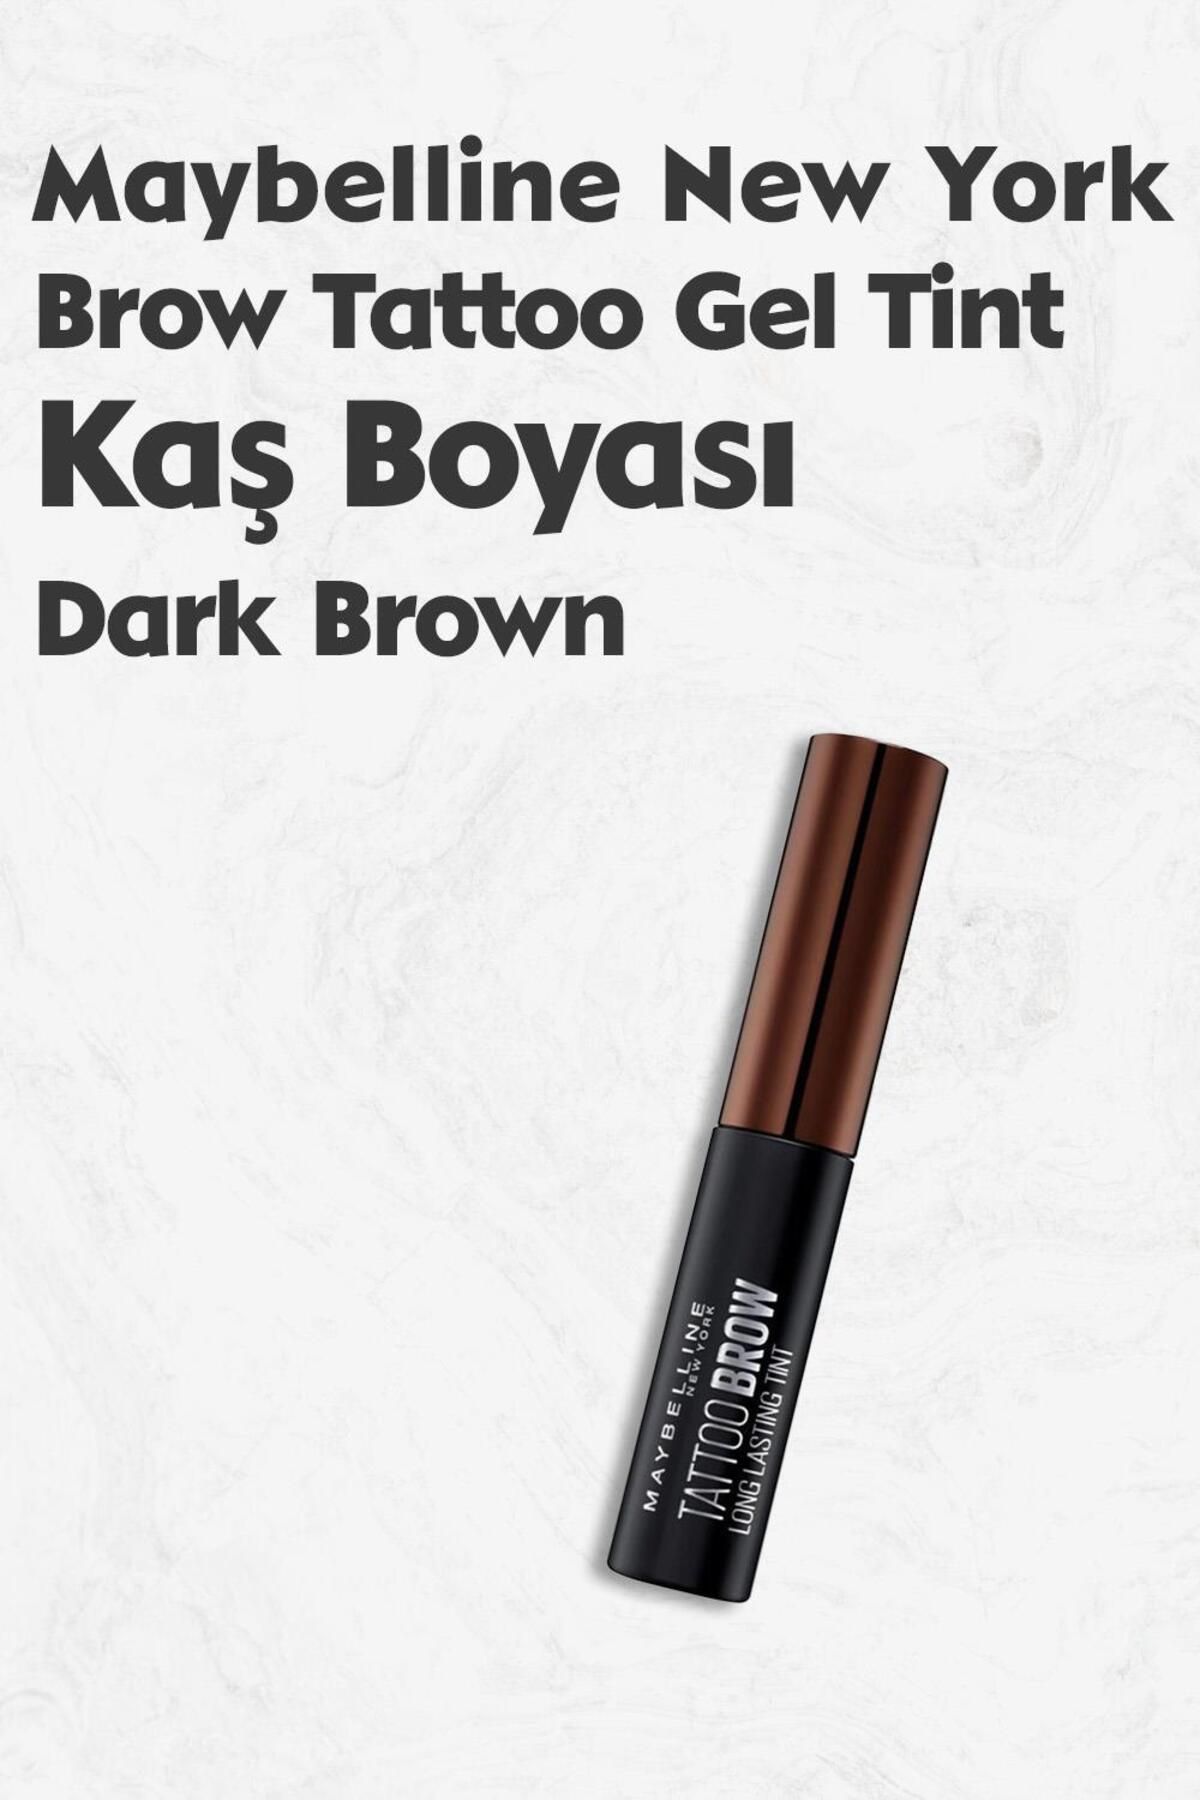 Maybelline New York Brow Tattoo Gel Tint Dark Brown - Koyu Ton